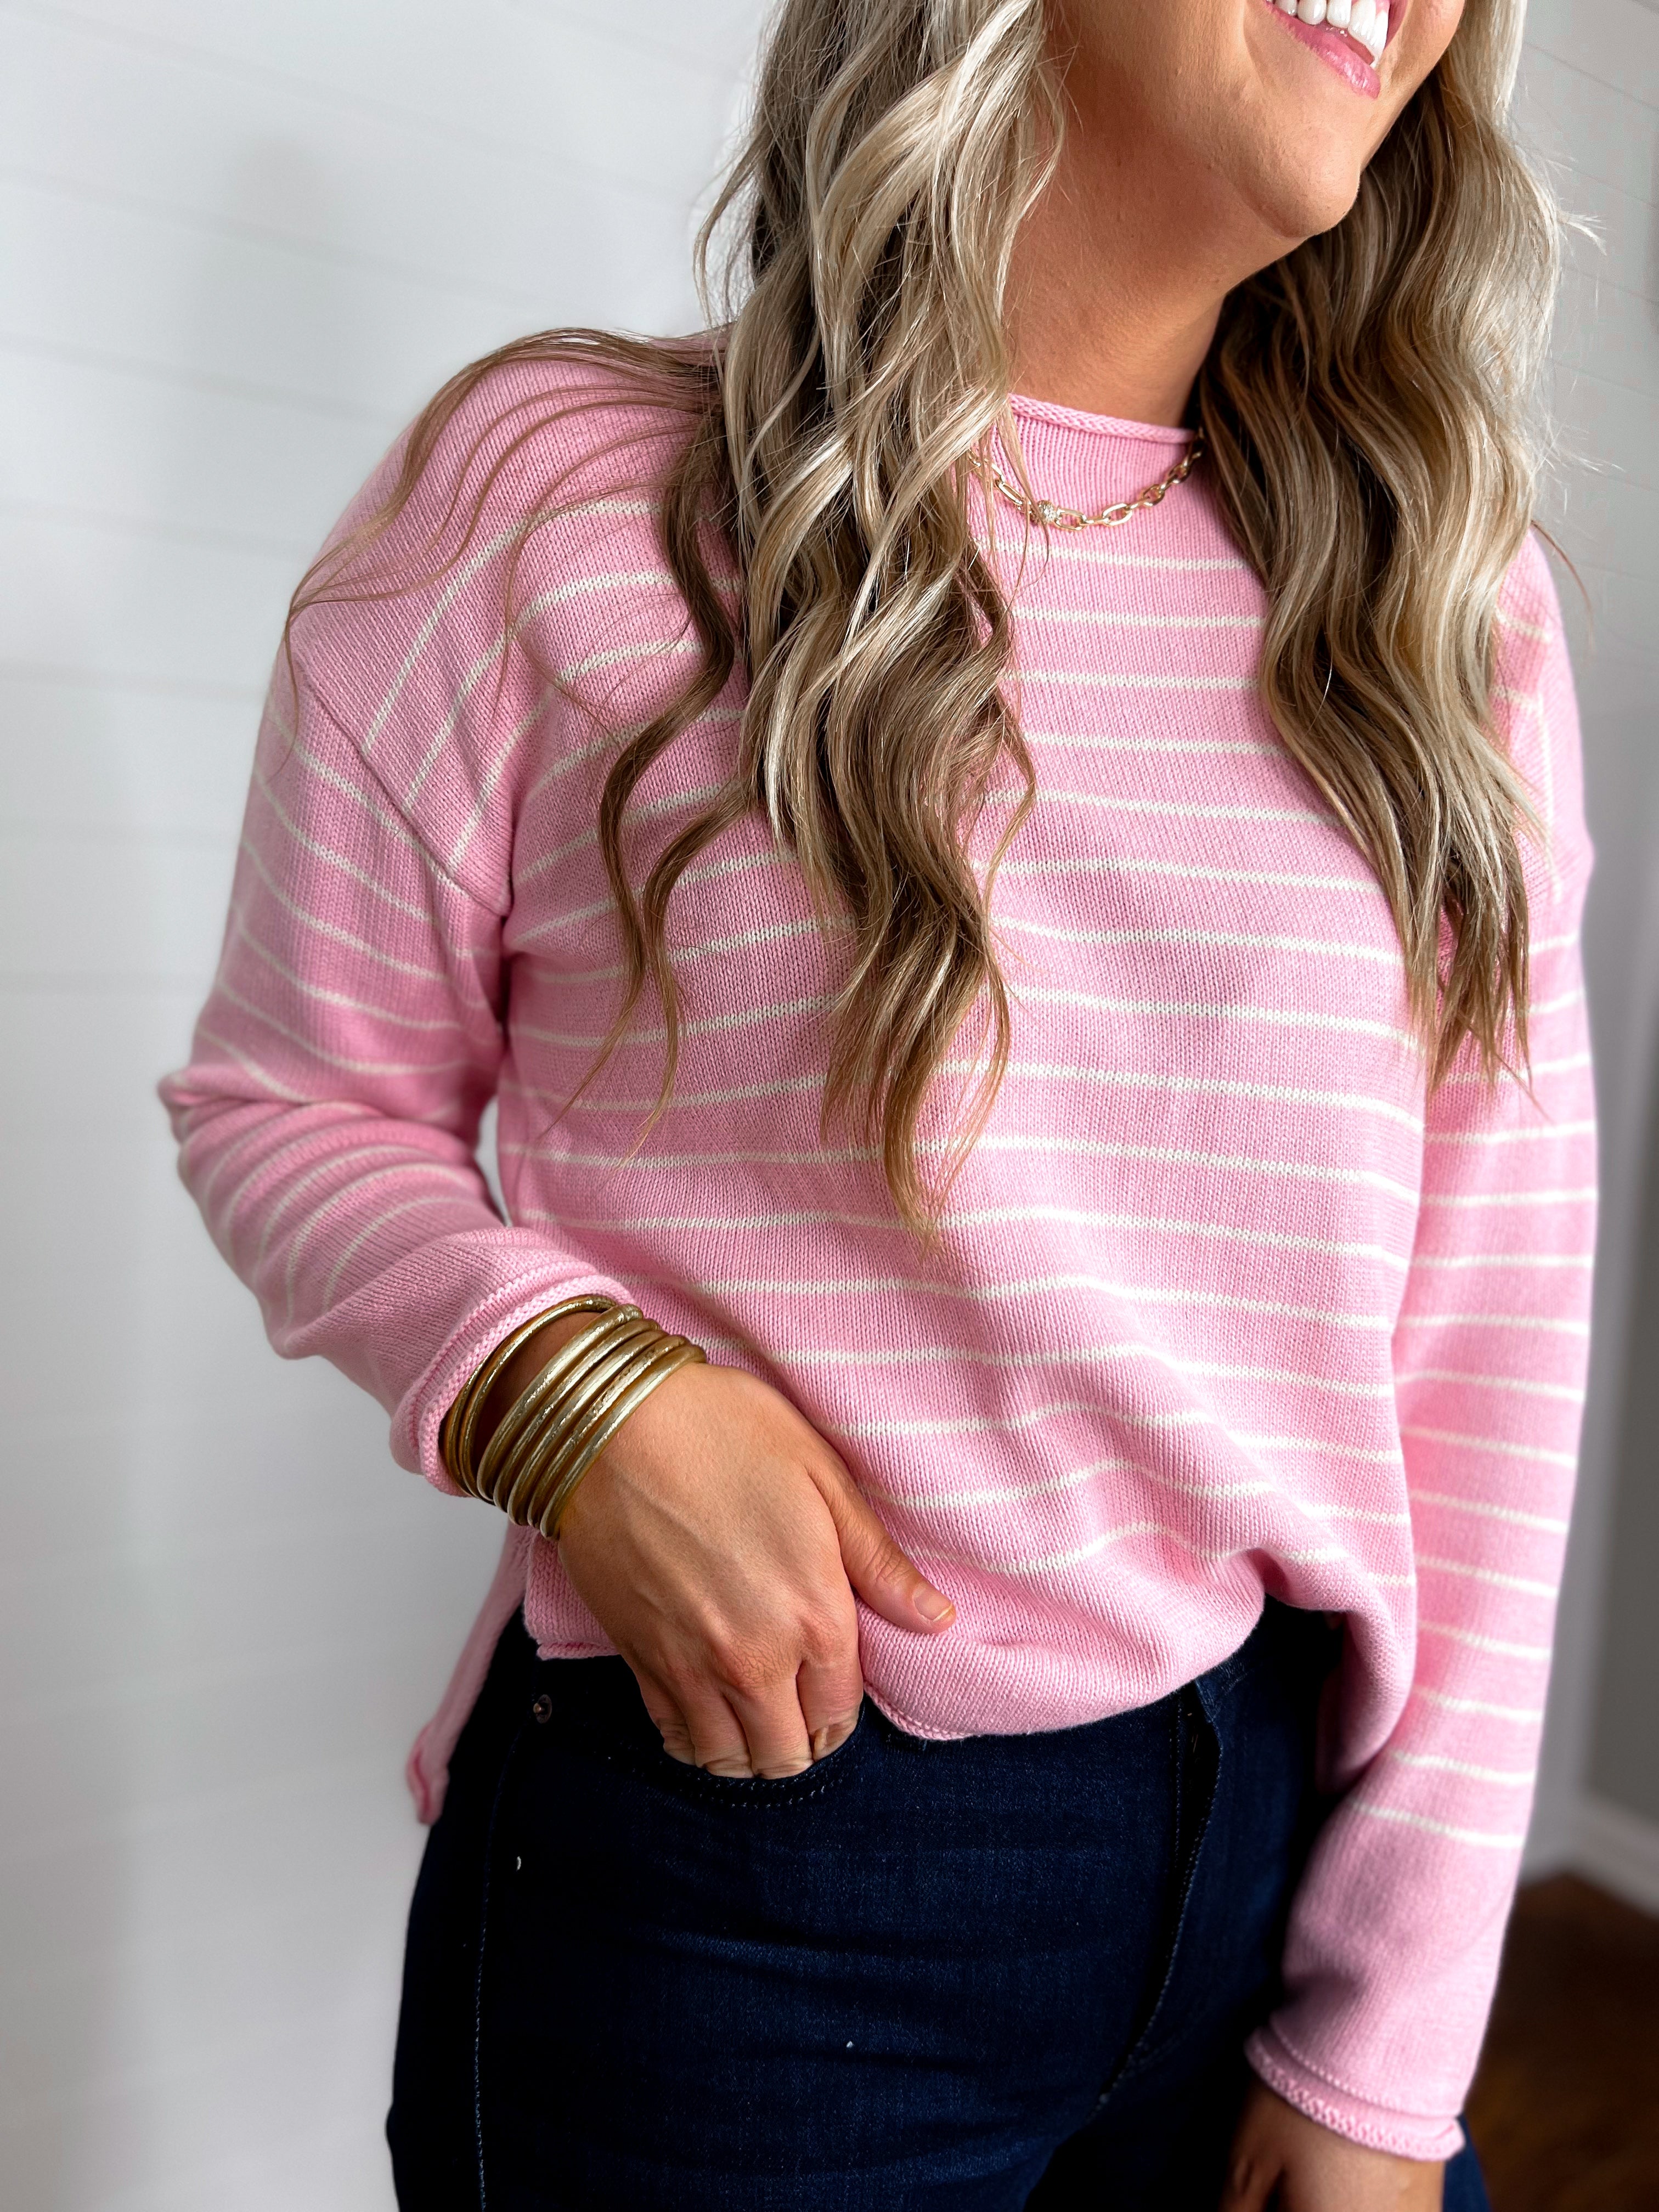 Pink Striped Knit Sweater